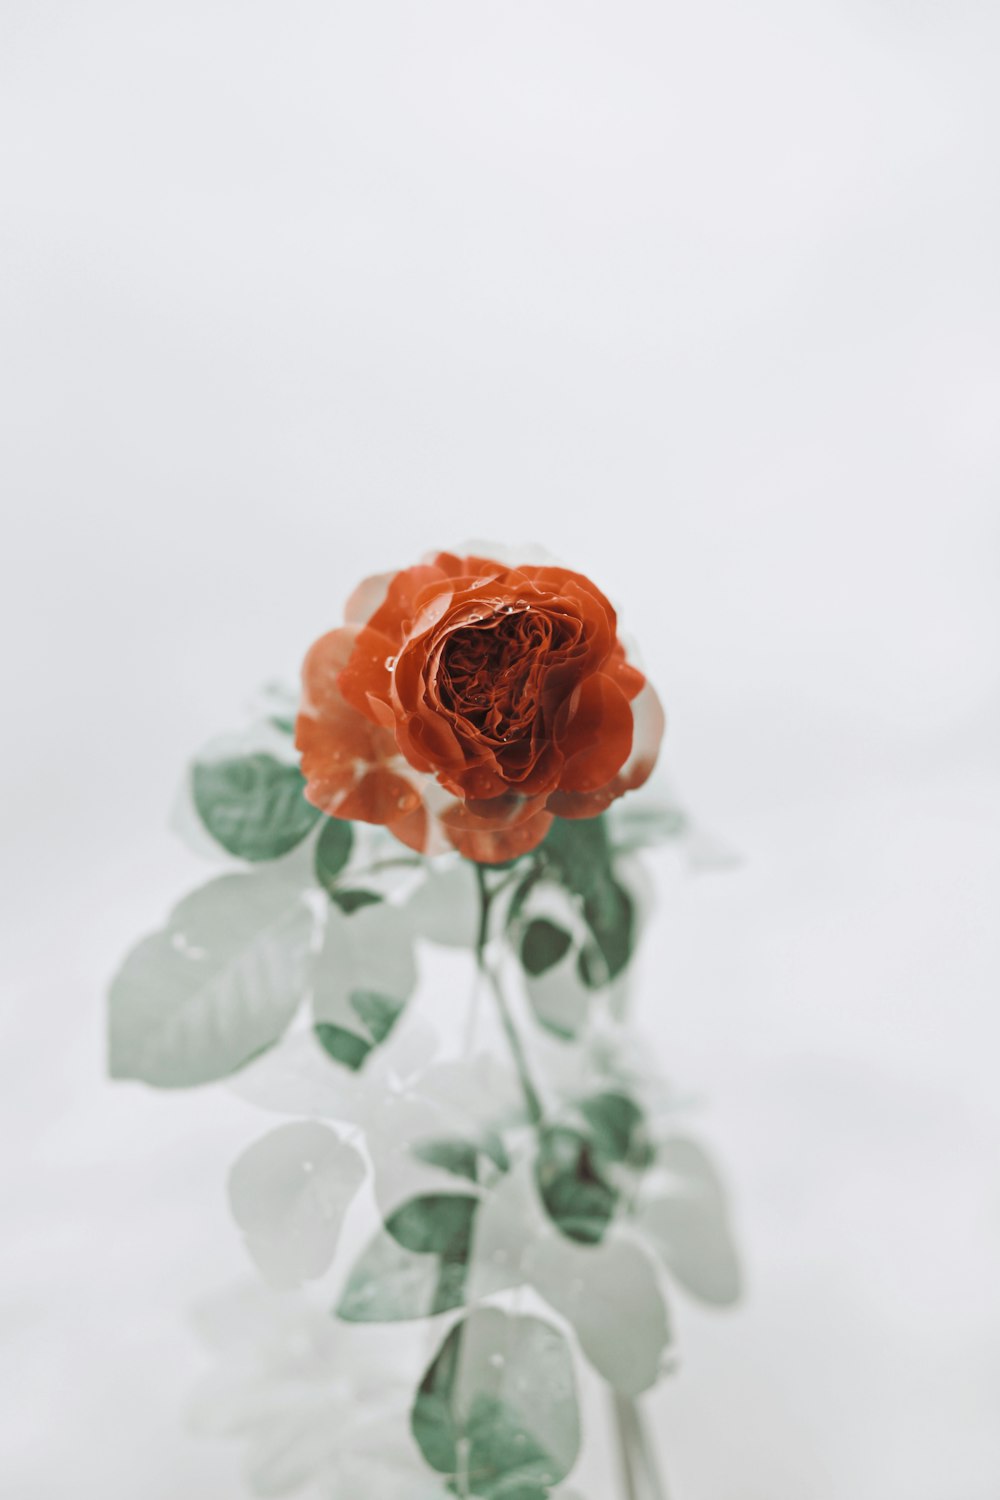 orange rose in bloom close up photo